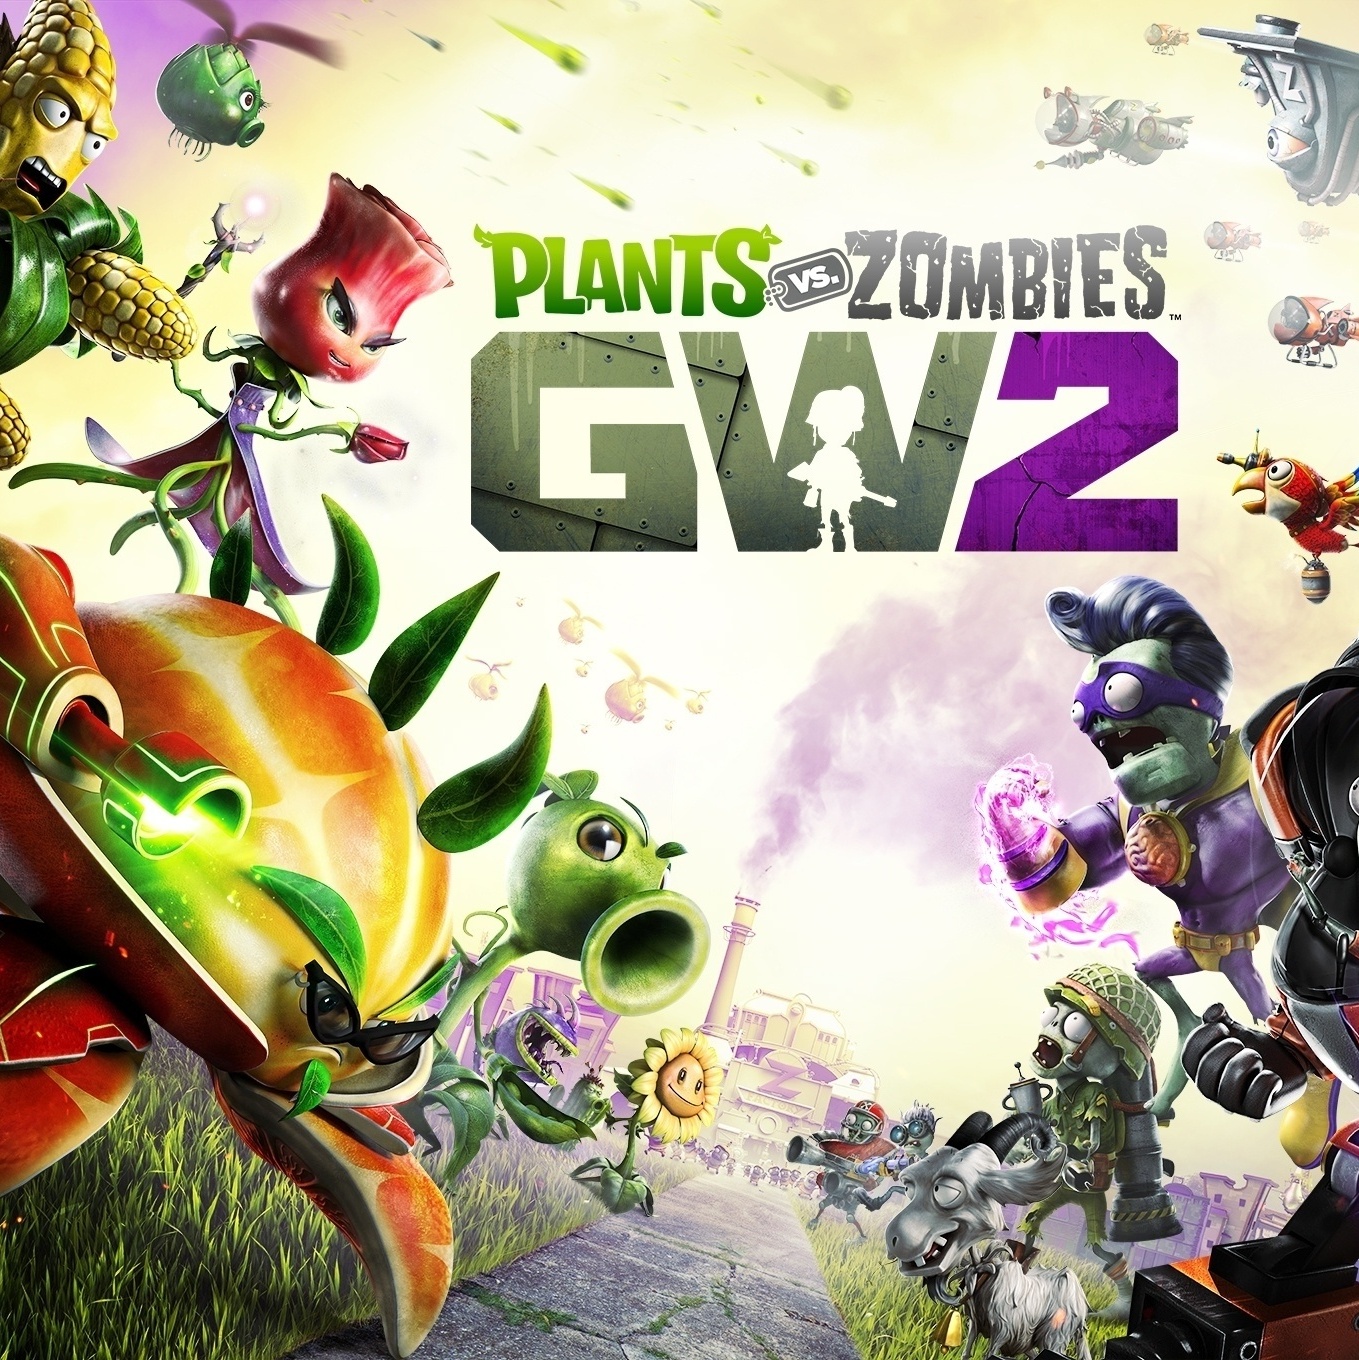 Escola Aberta: Review completo de Plants vs Zombies